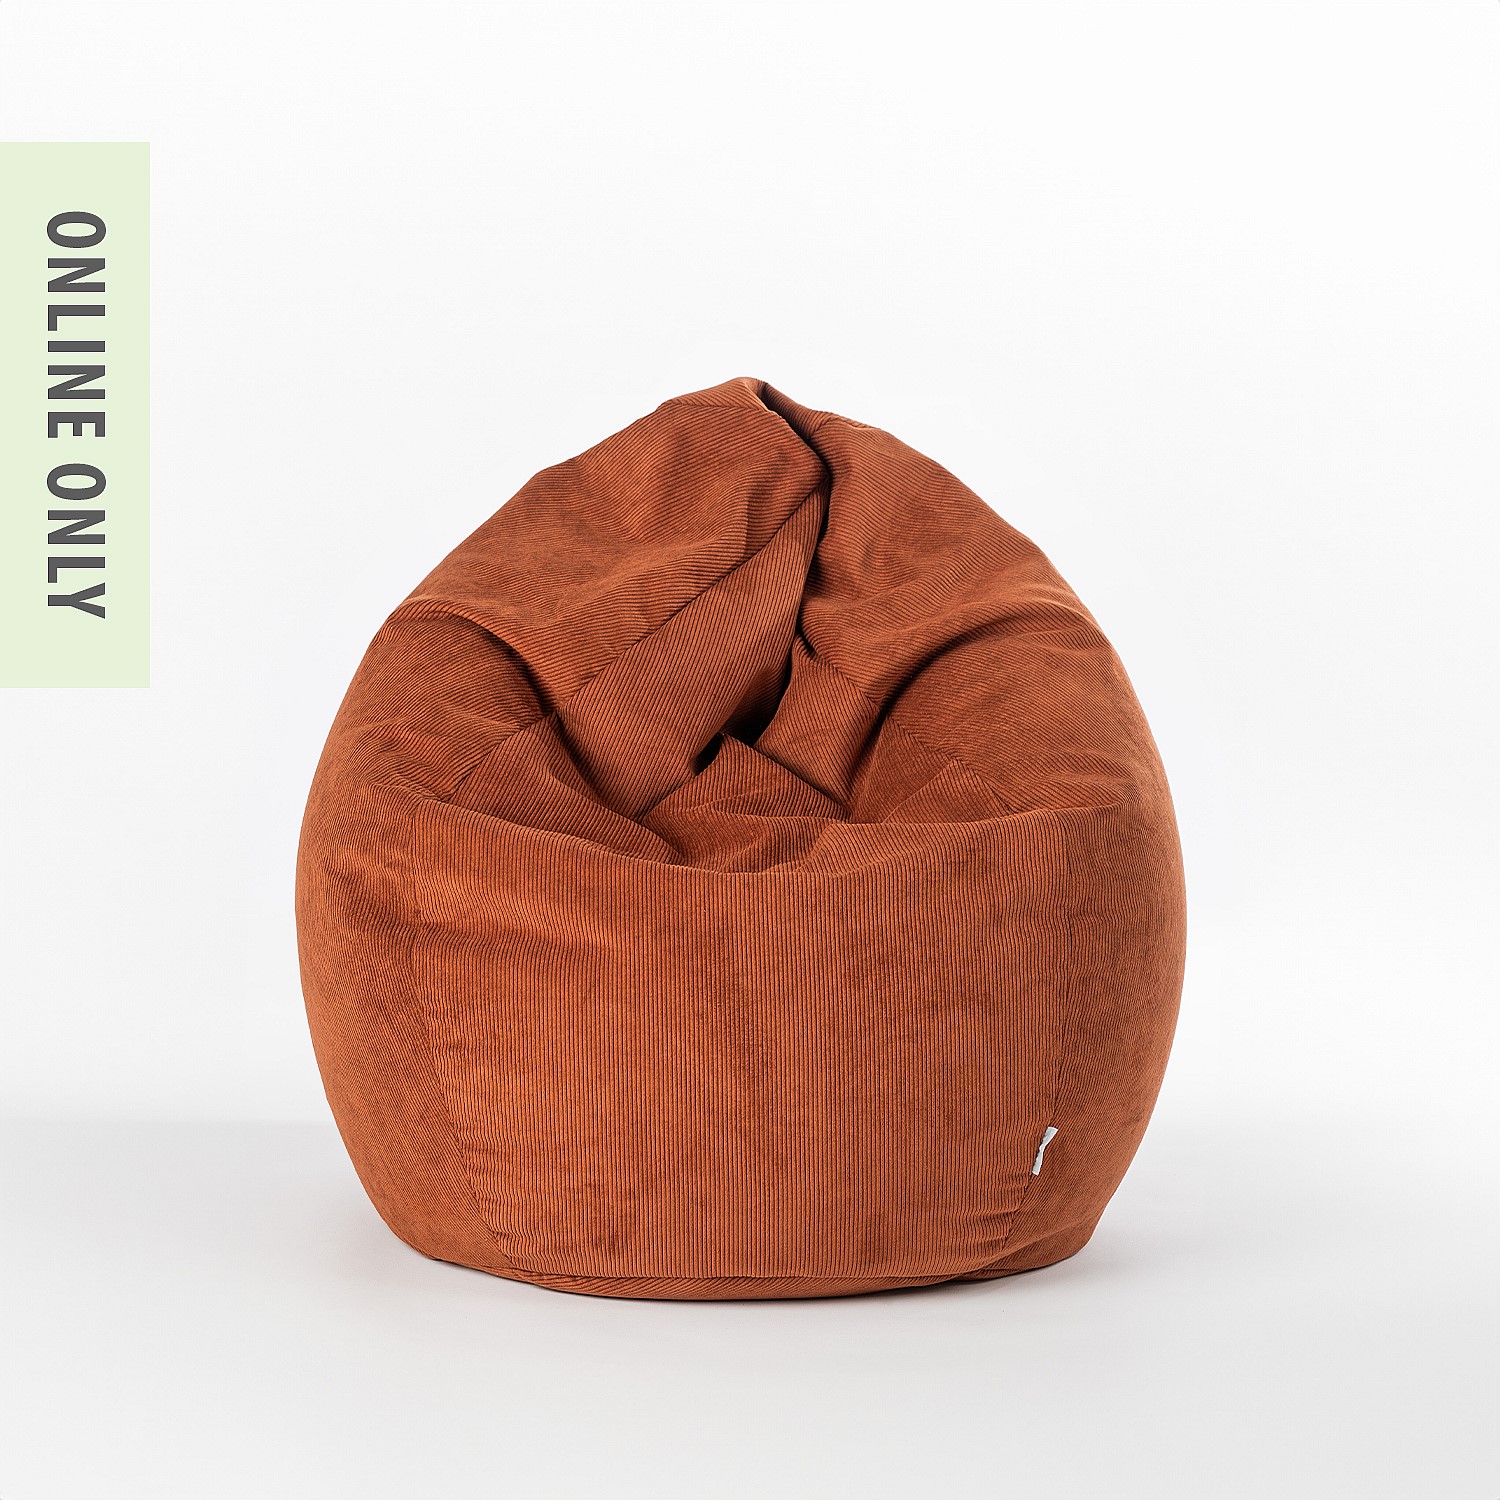 Design Republique Corduroy Bean Bag Cover